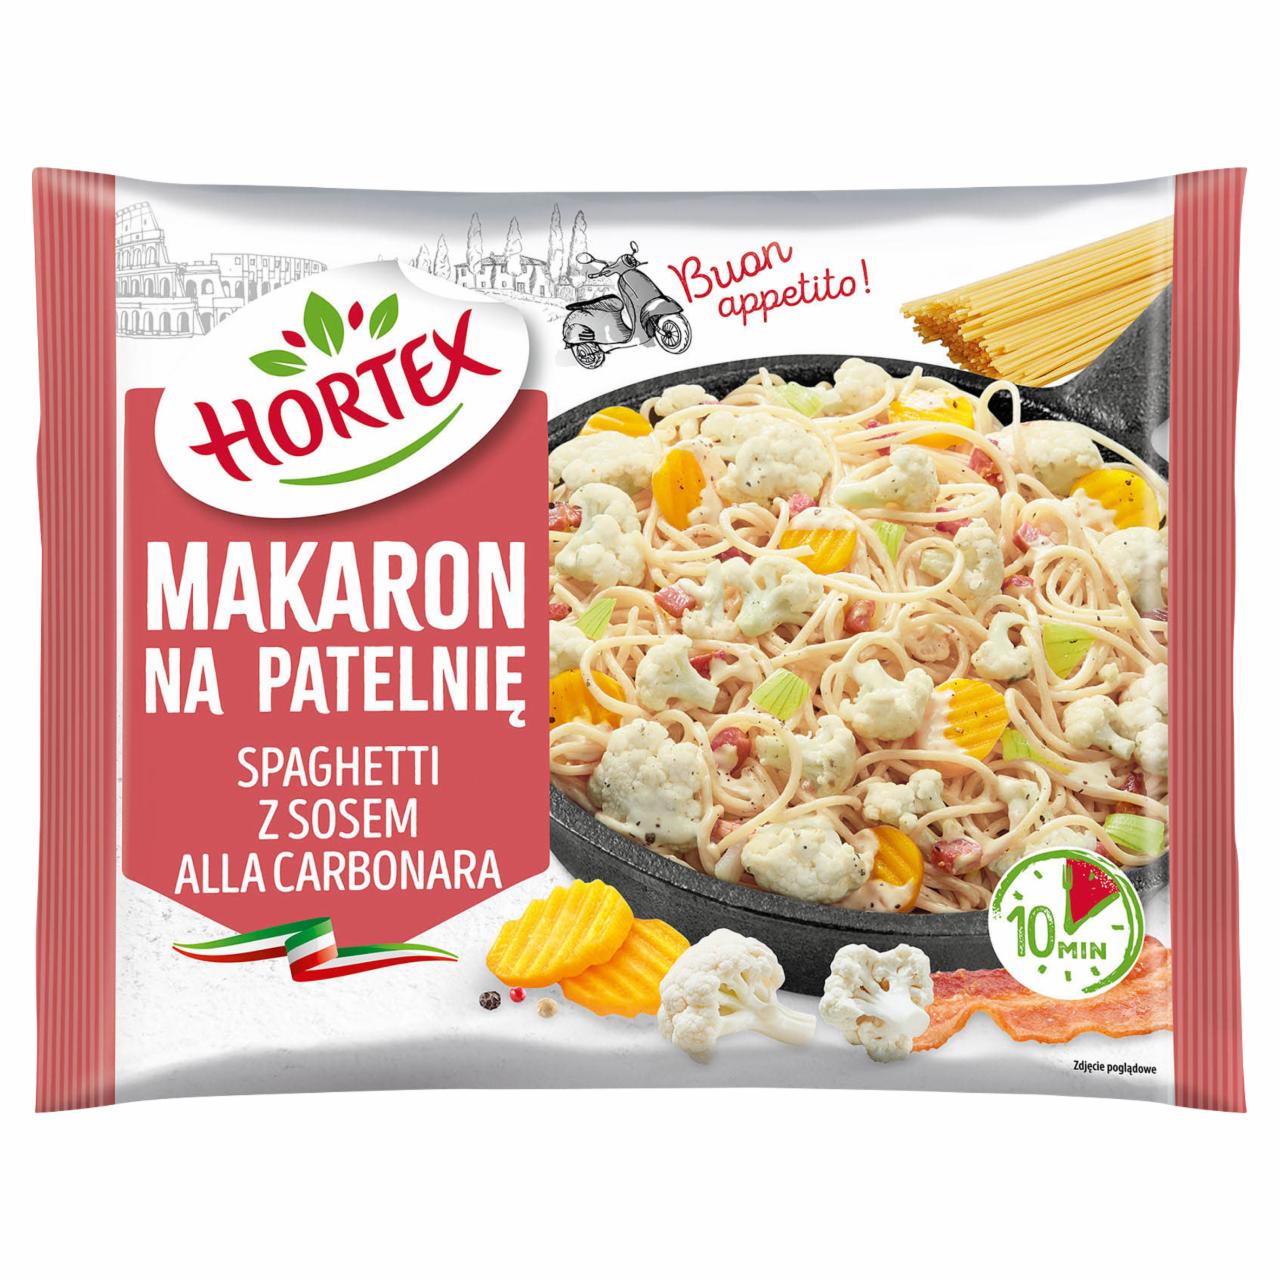 Zdjęcia - Hortex Makaron na patelnię świderki z sosem alla carbonara 450 g